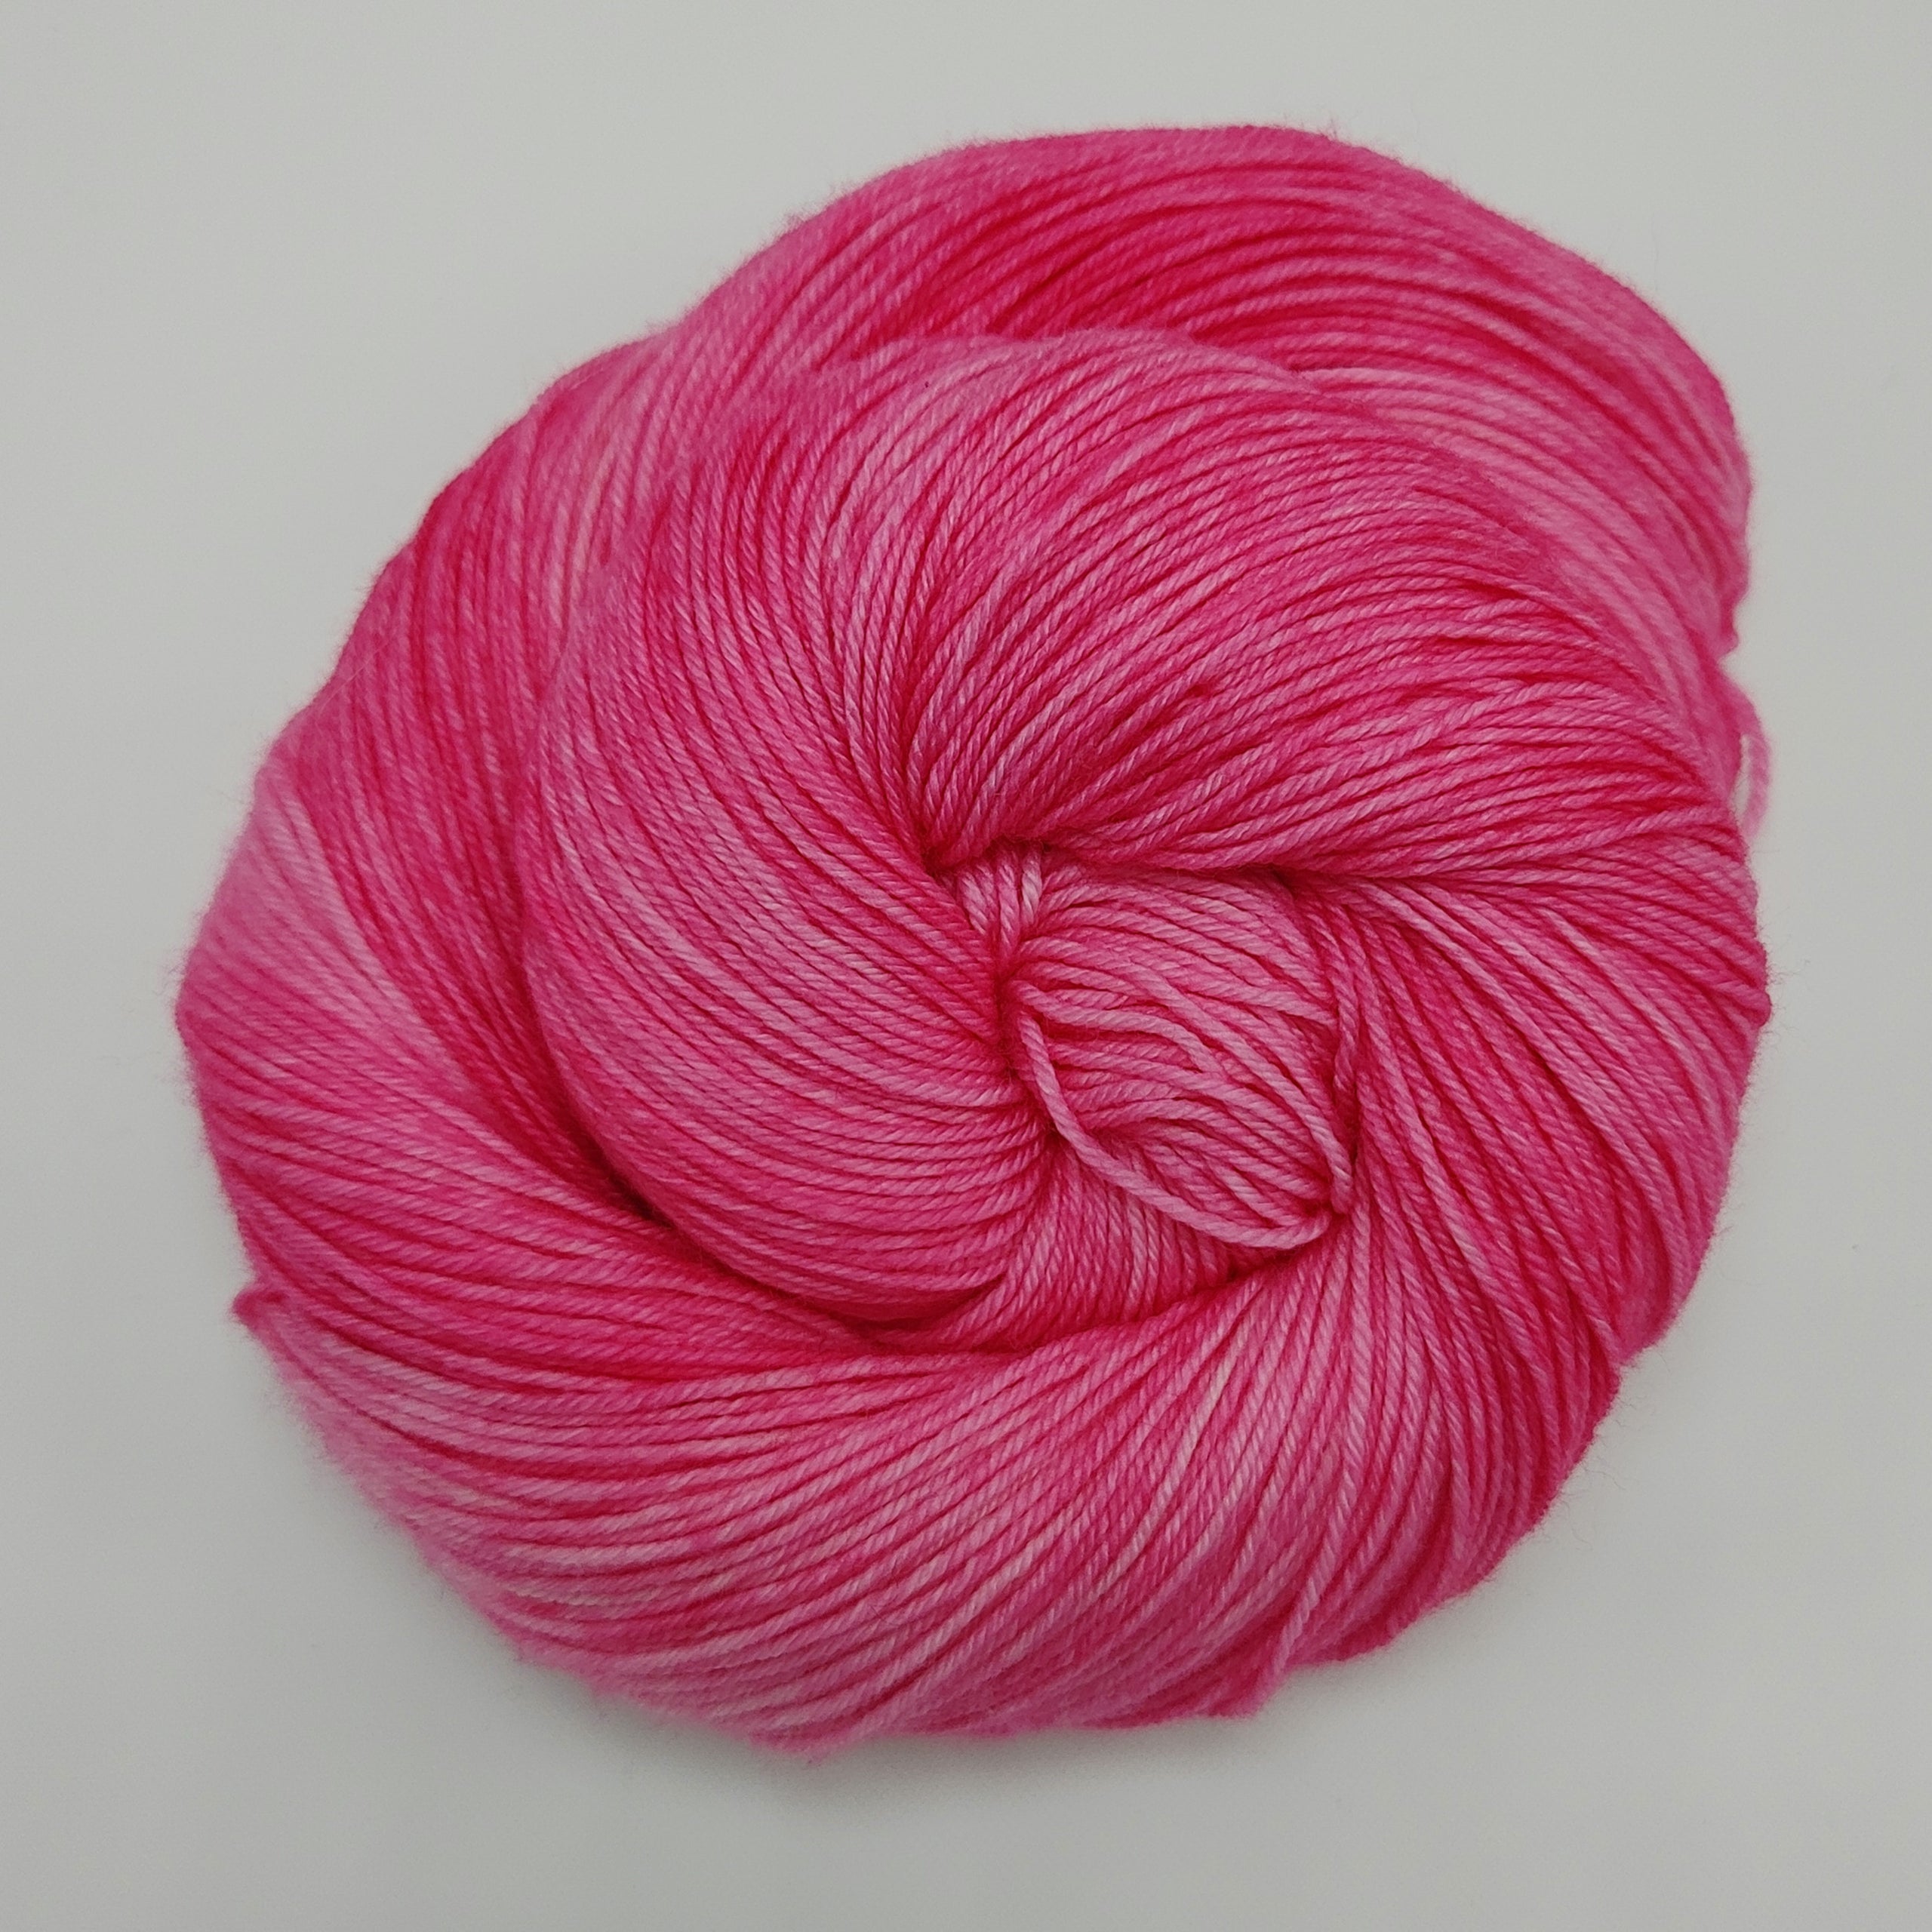 Hot Pink - 85% Superwash Extra Fine Merino Wool 15% Nylon - Fingering  Weight Sock Yarn - Toasty Extra Fine - Indie Dyed Yarn - Hand Dyed Yarns  for Knitting Crochet Weaving